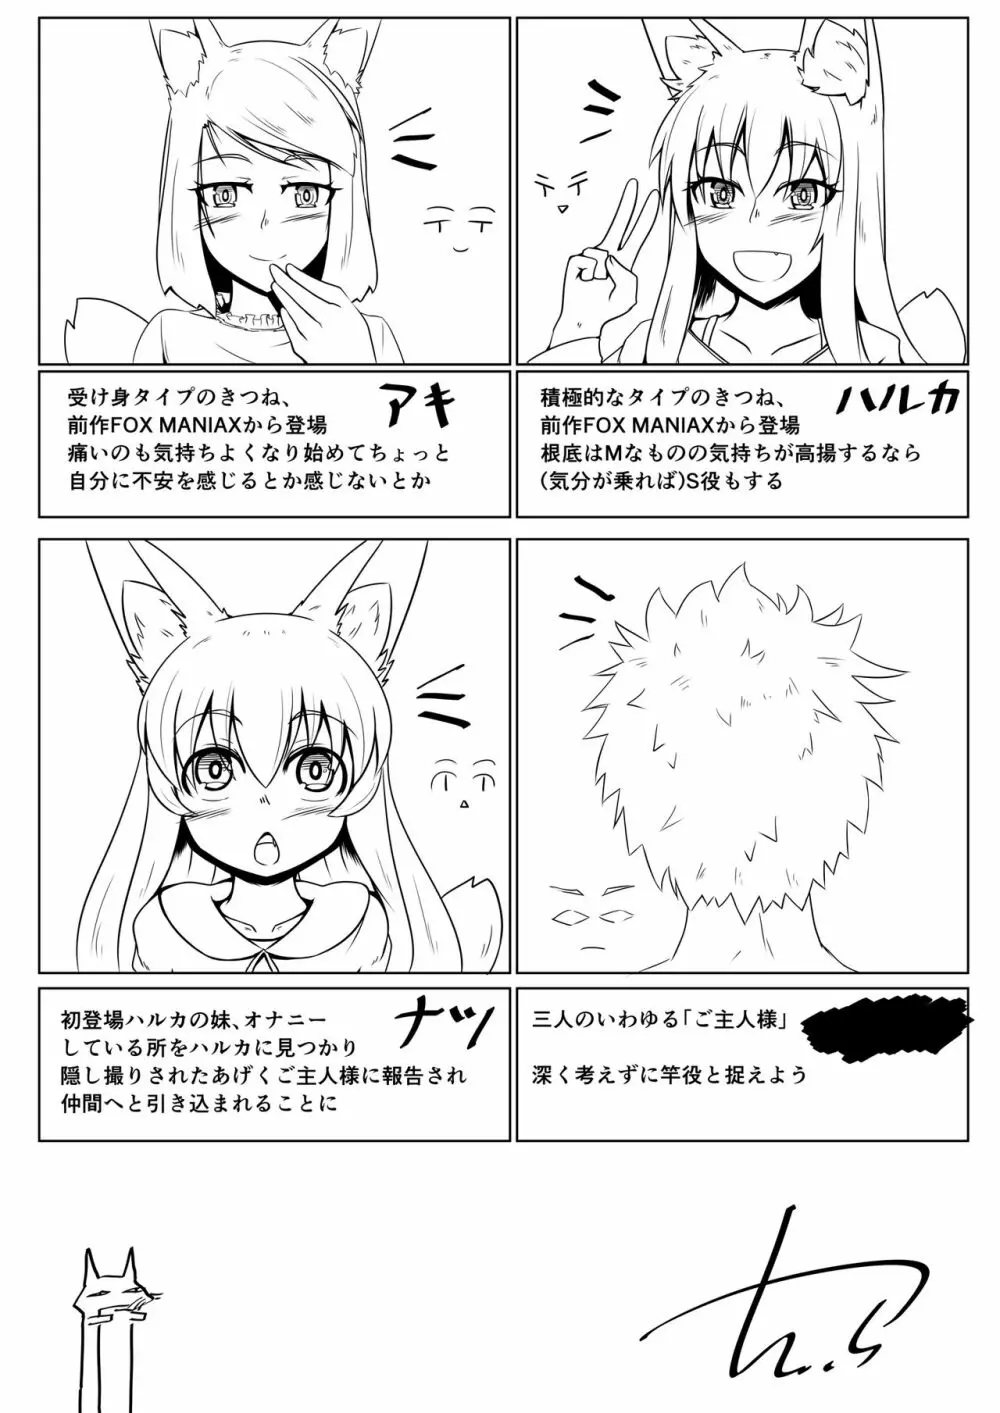 FOX MANIAX2 - page29